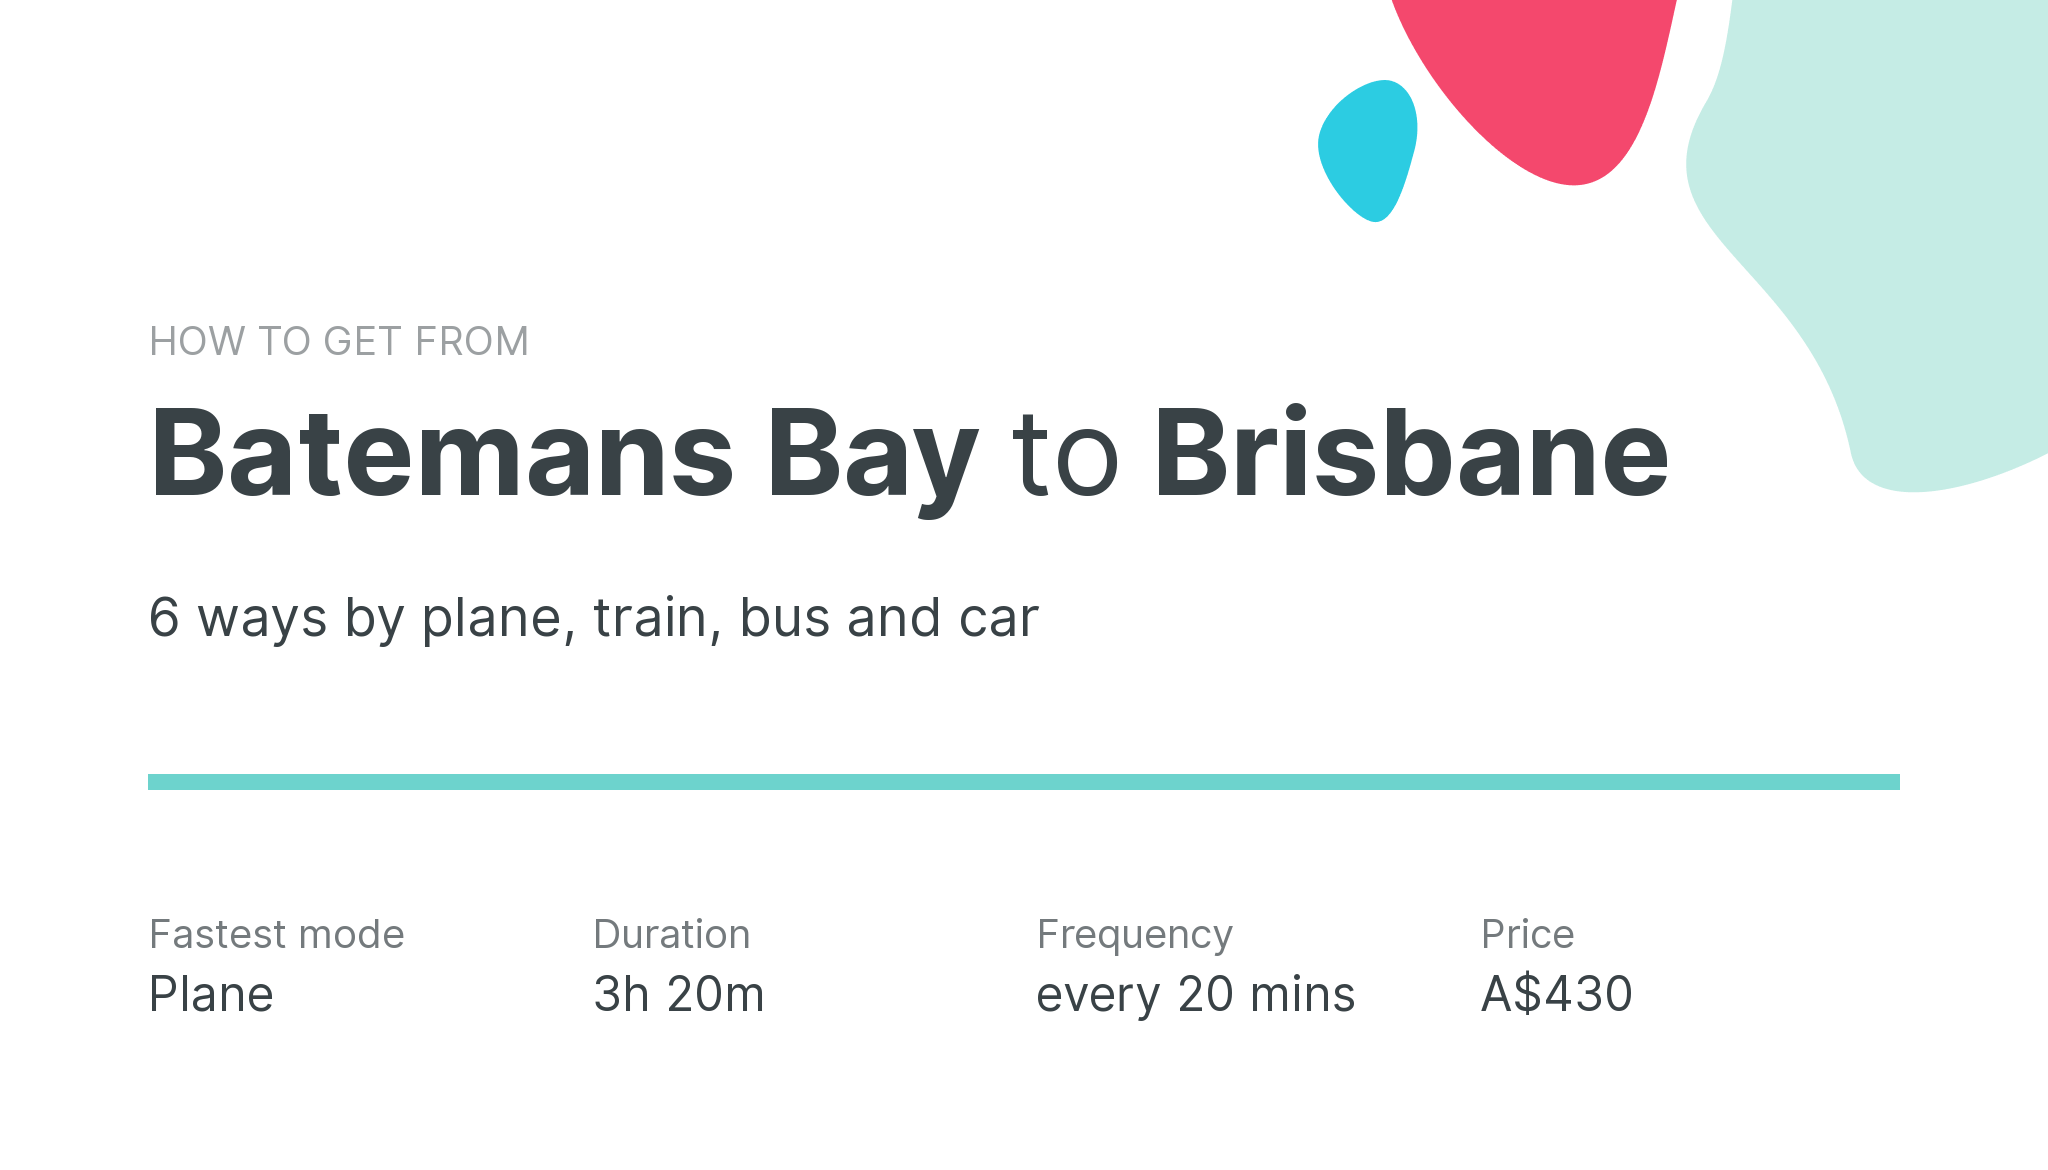 How do I get from Batemans Bay to Brisbane